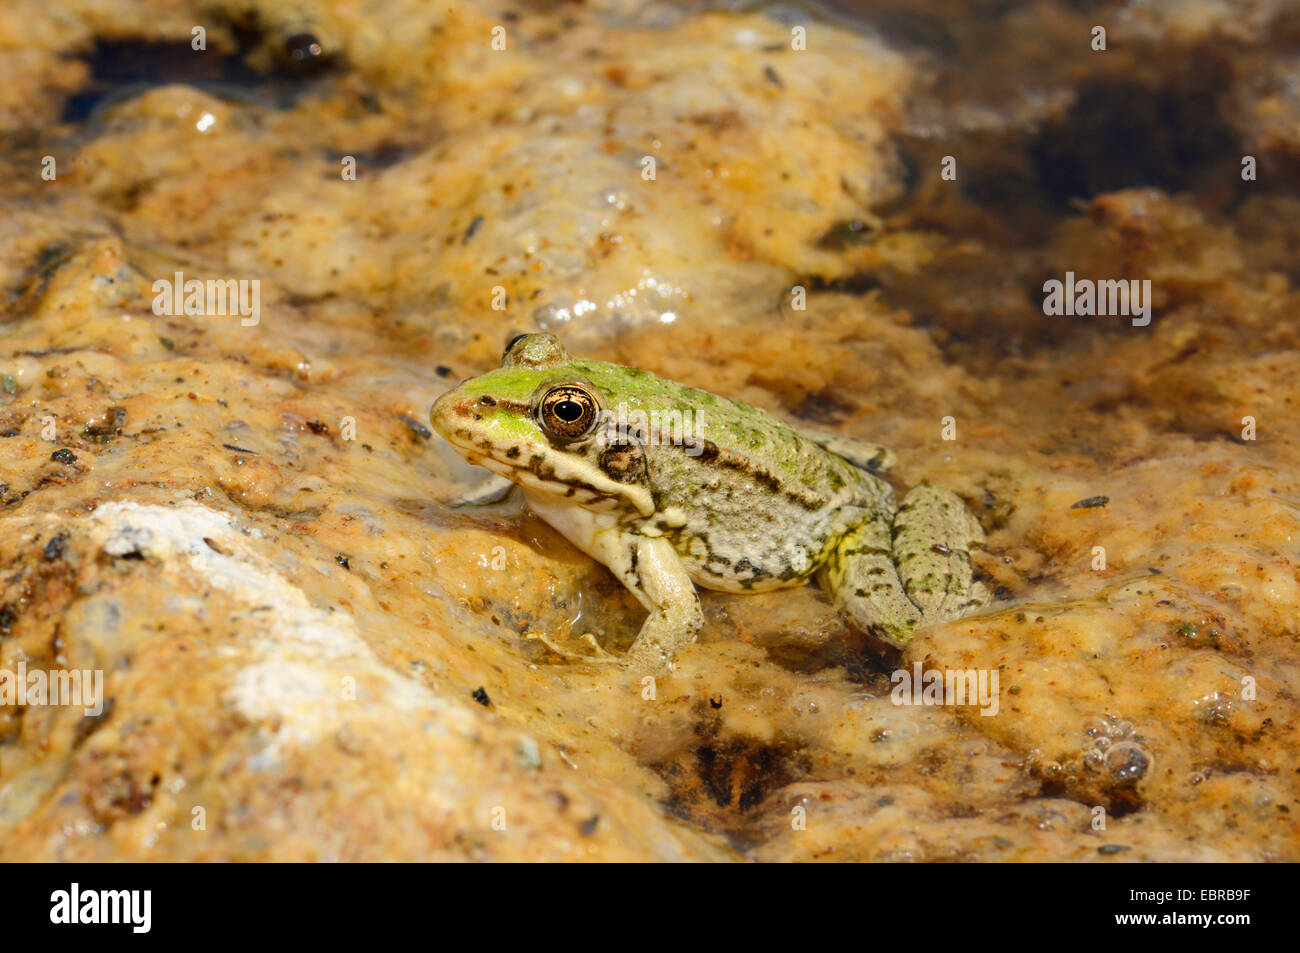 marsh frog, lake frog (Rana ridibunda, Pelophylax ridibundus), sits on the shore, Turkey, Dalyan Stock Photo